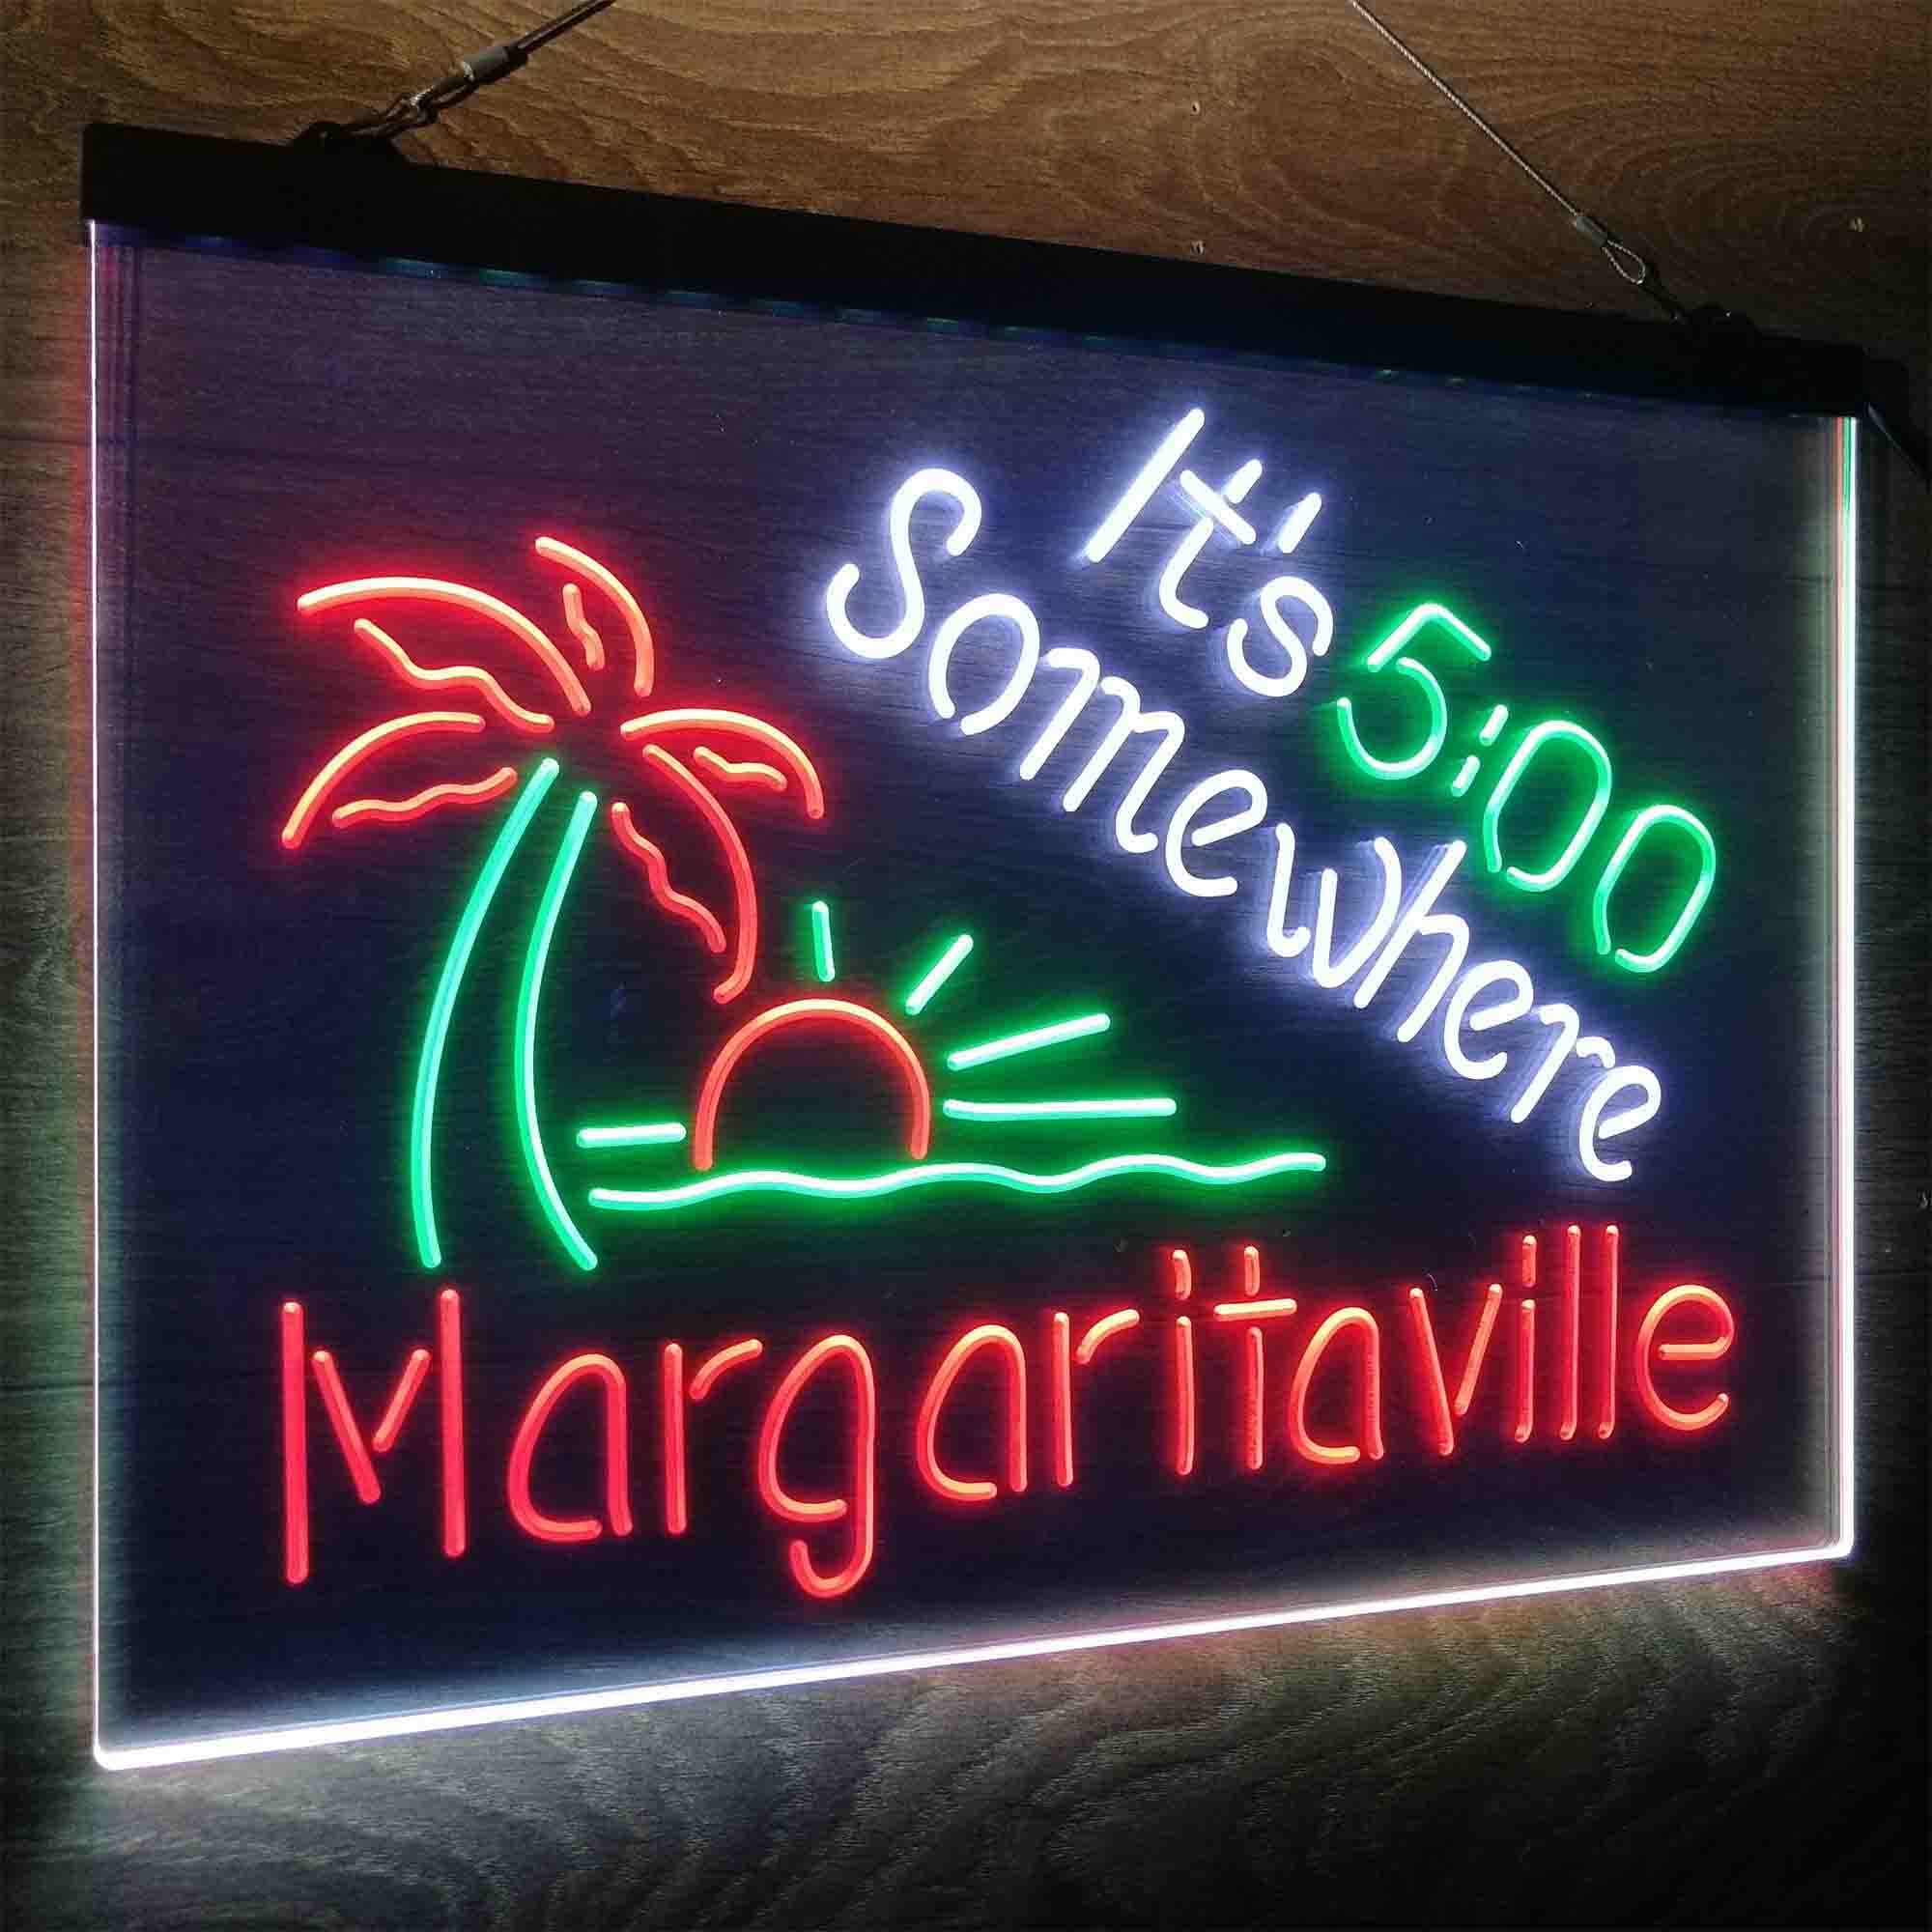 It's 500 Somewhere Margaritaville Neon LED Sign 3 Colors